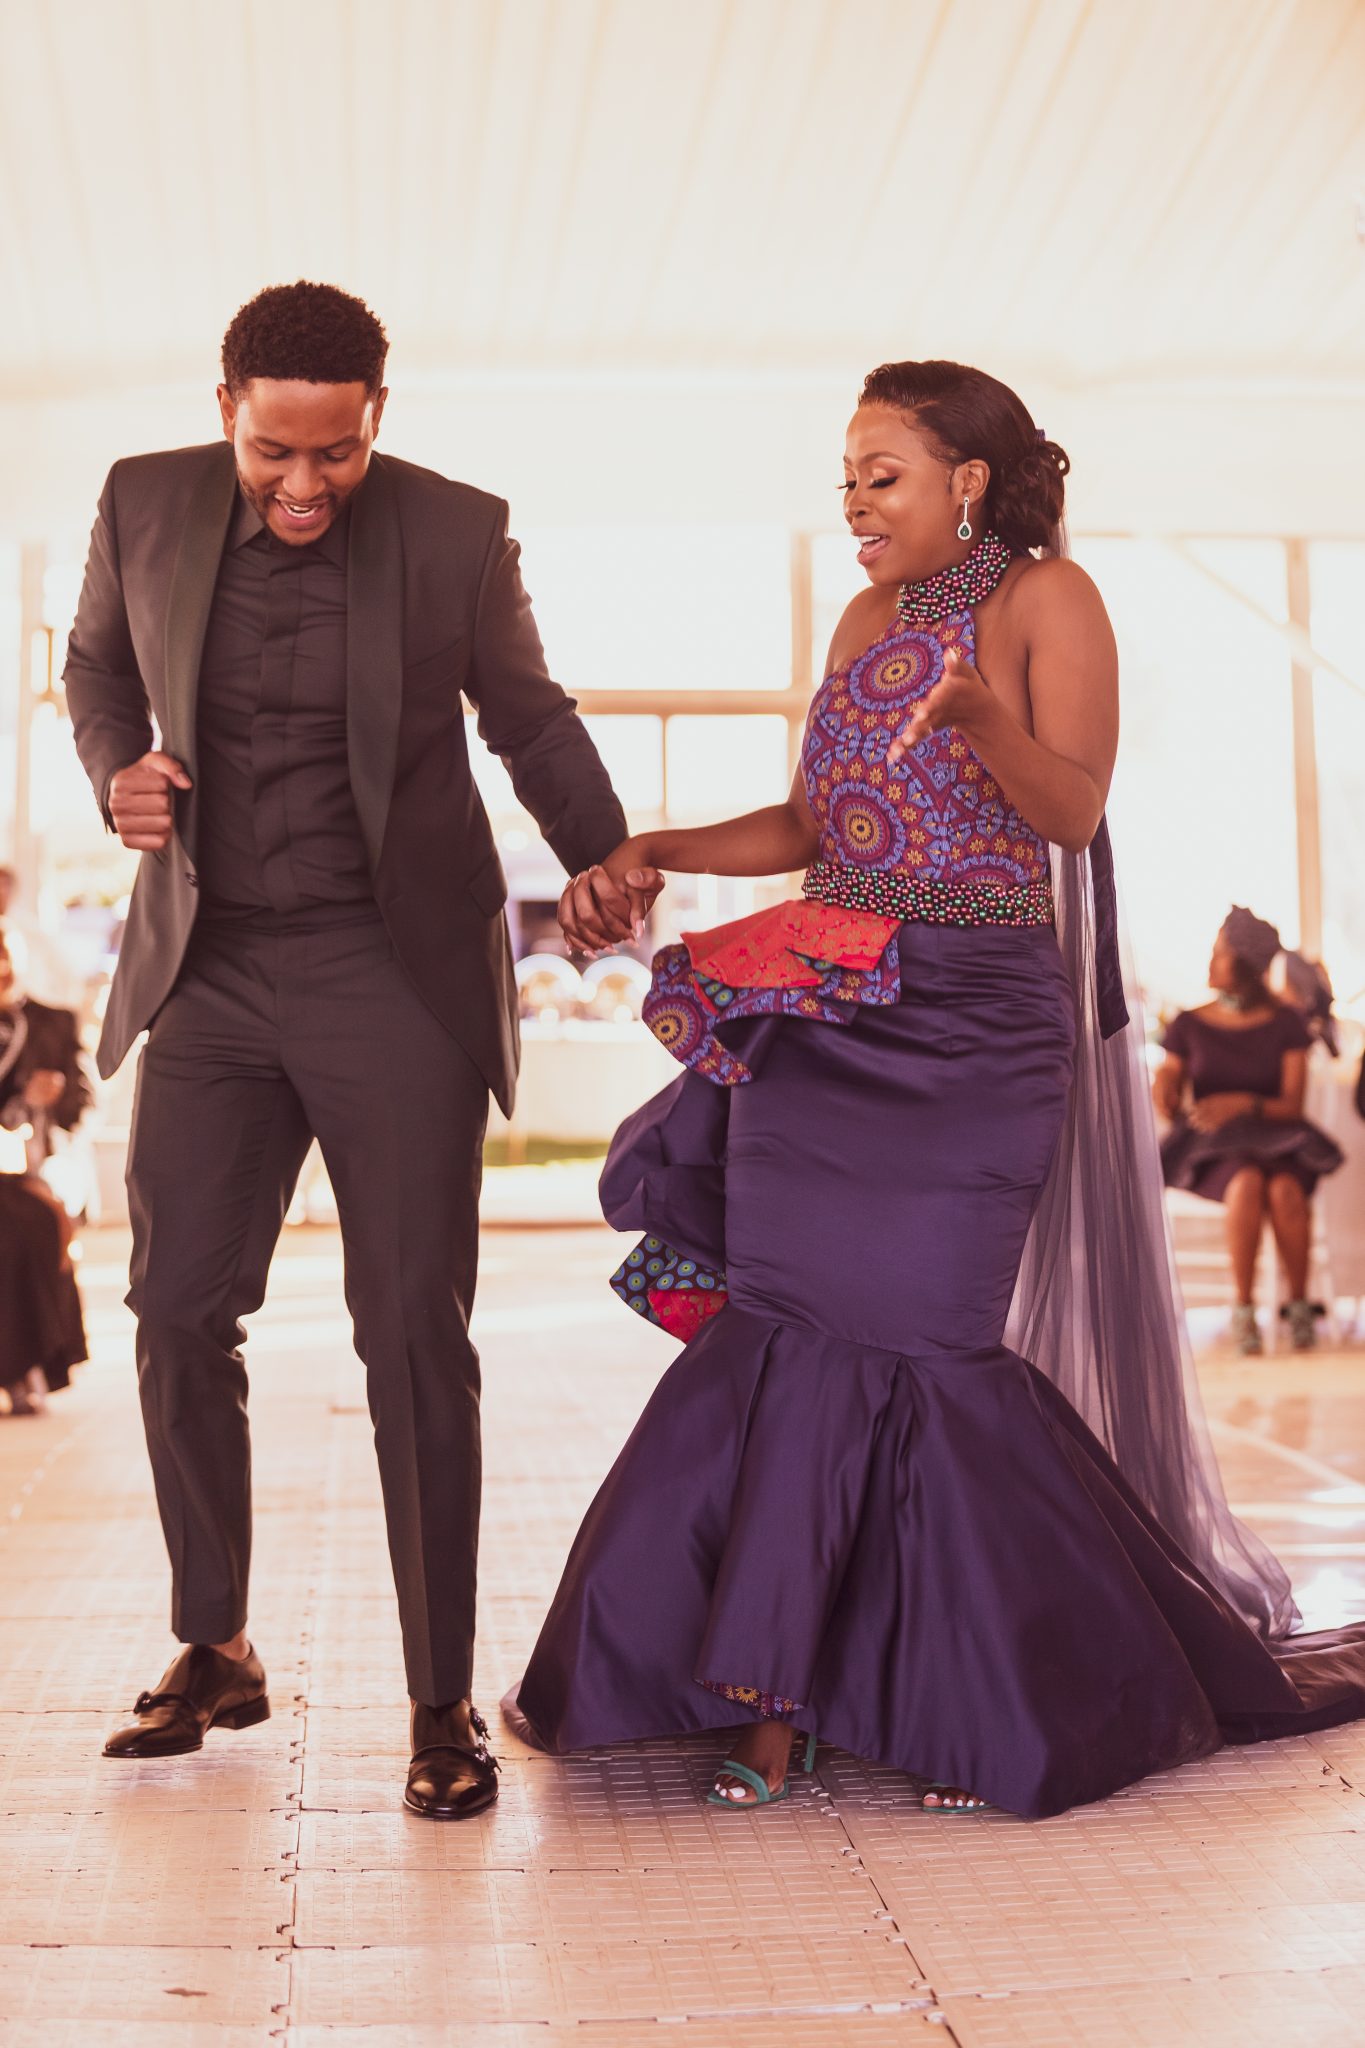 Enjoy this magical Botswana wedding of Setadimo and Kgosi